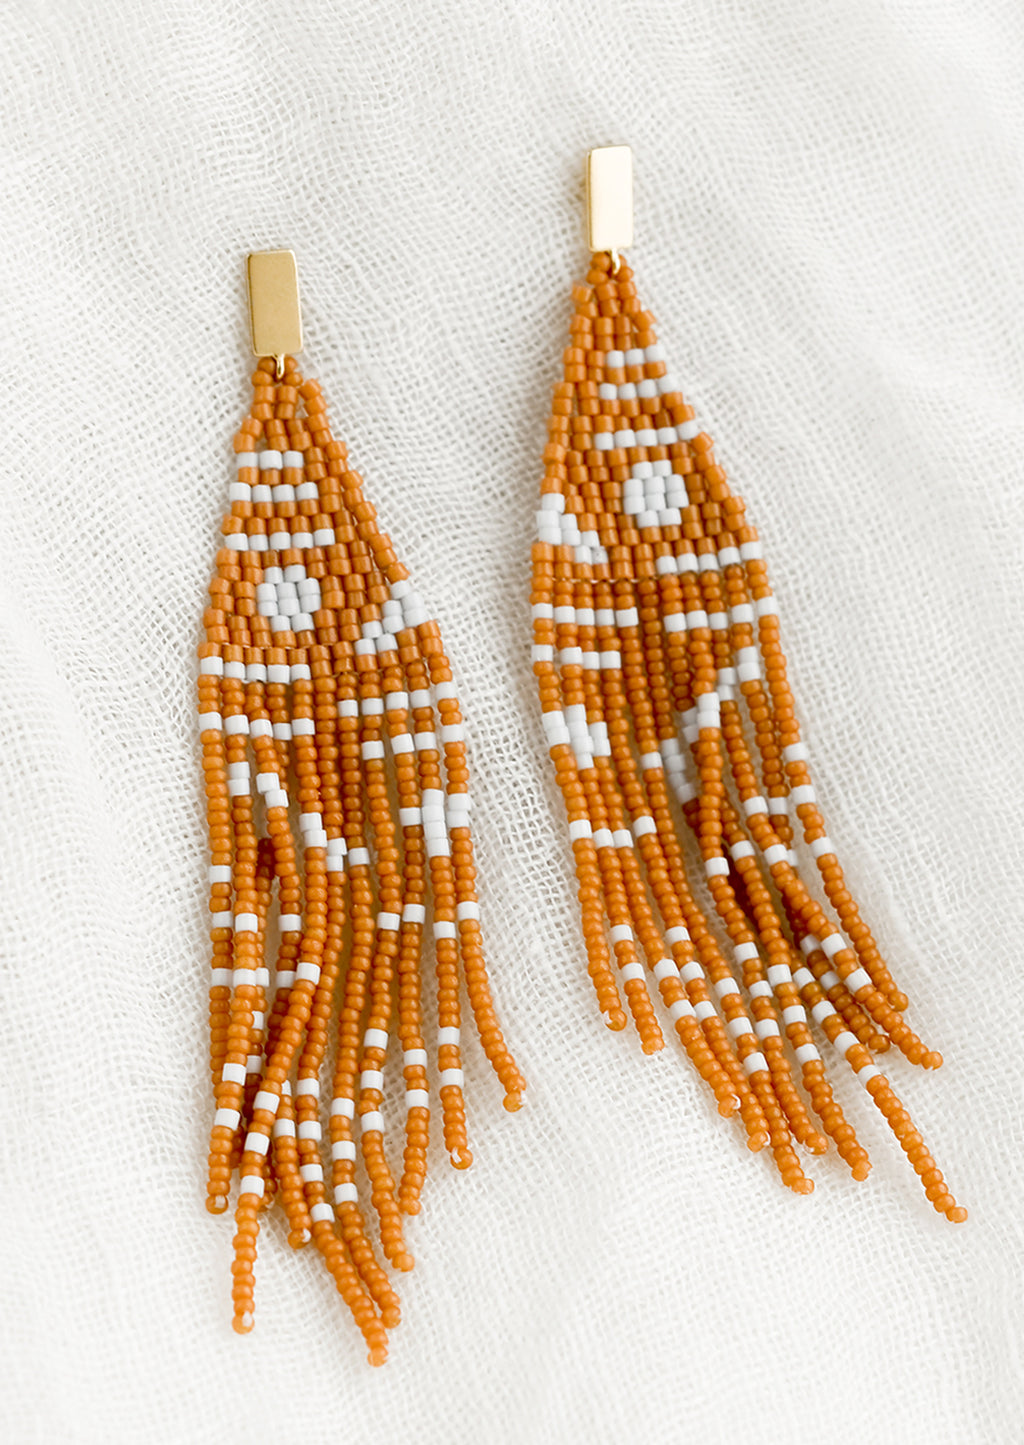 Cedar Multi: A pair of beaded earrings with geometric pattern in cedar and white.